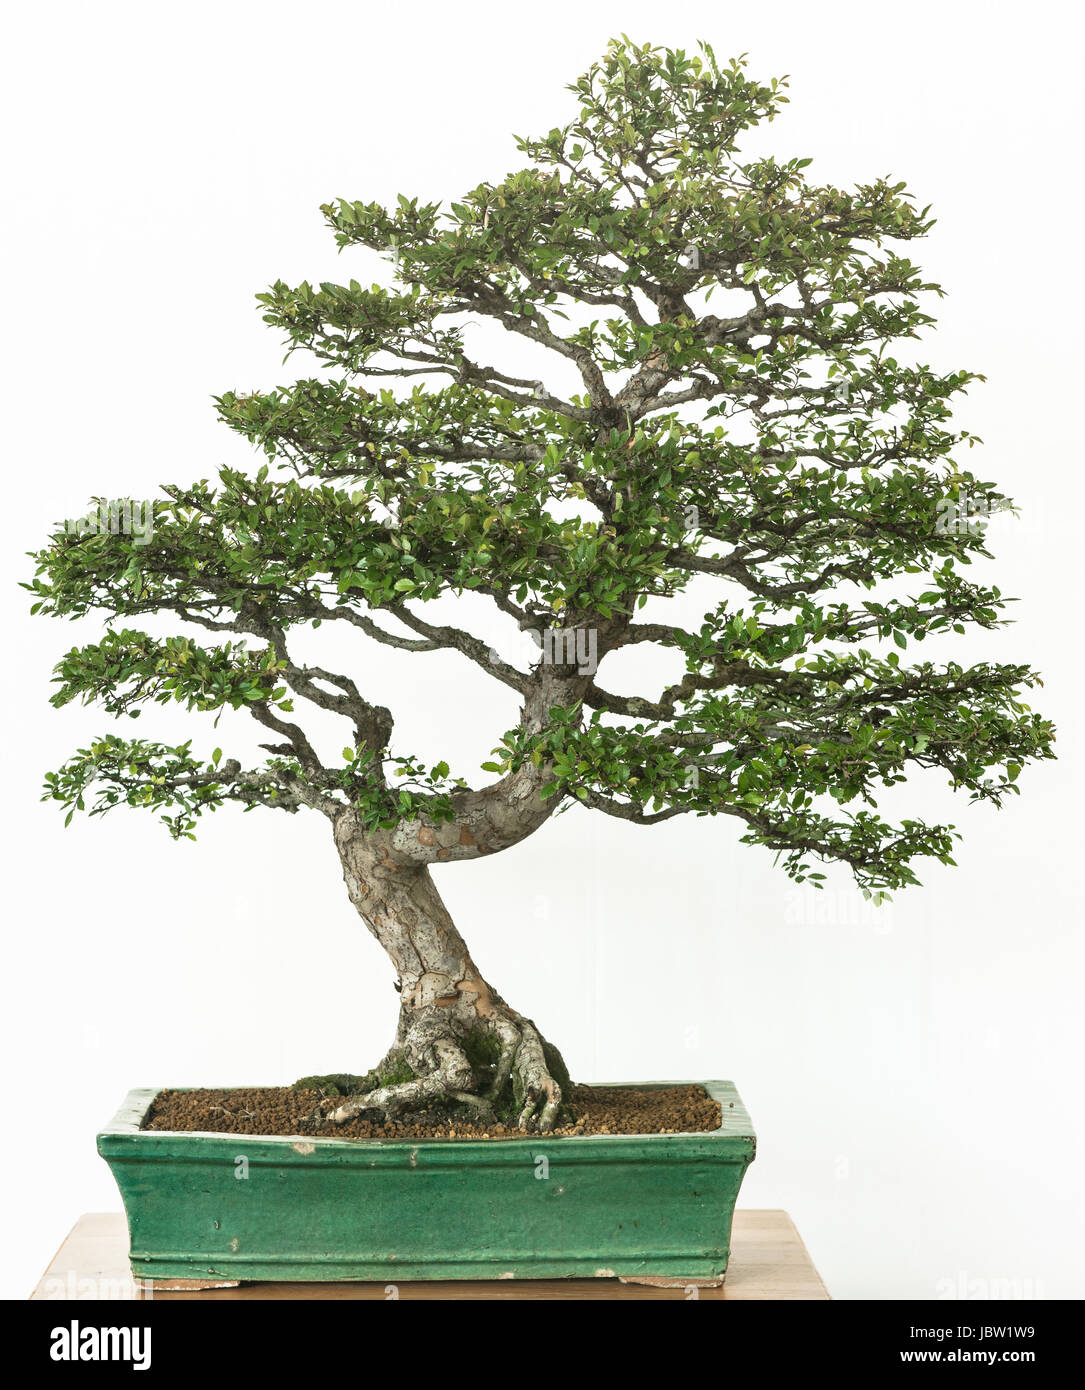 Chinesische Ulme (Ulmus parvifolia) als Bonsai Baum Stock Photo